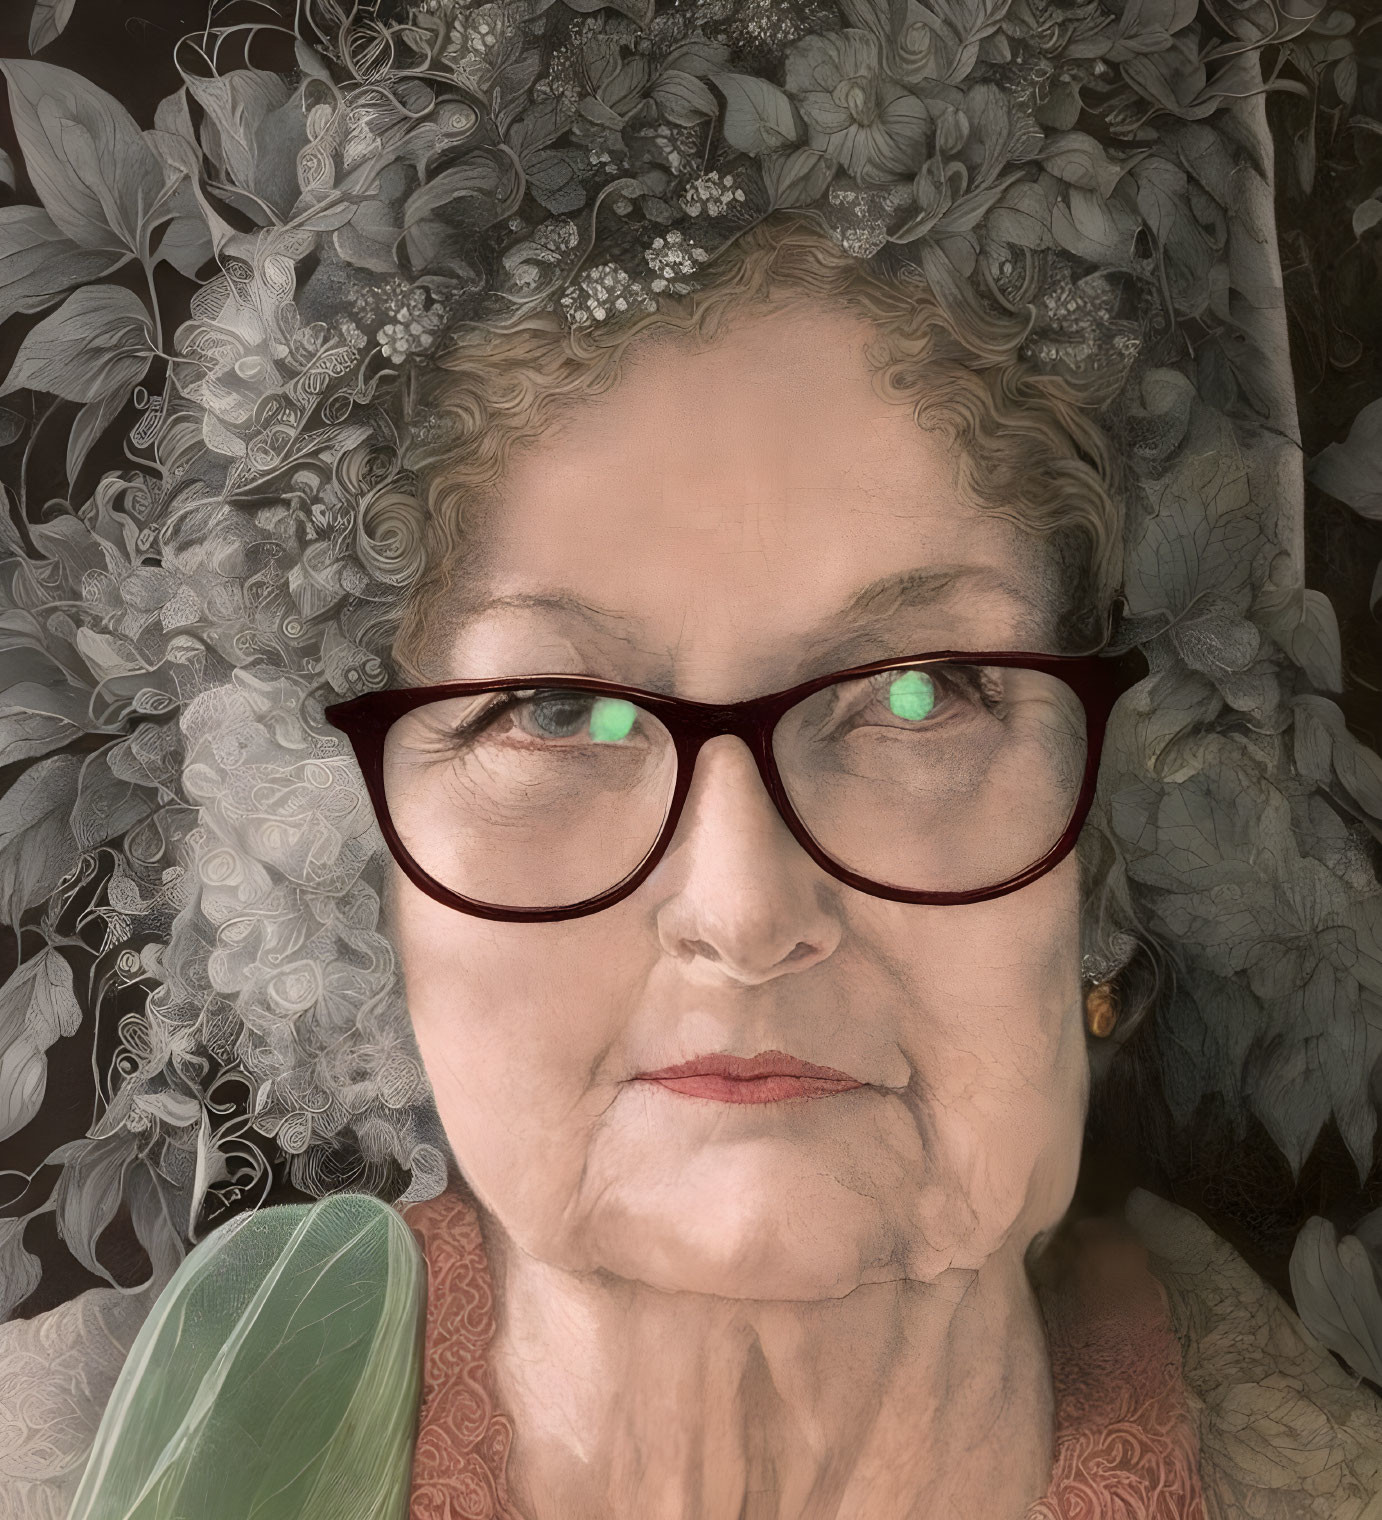 Self Portrait as an older flower girl